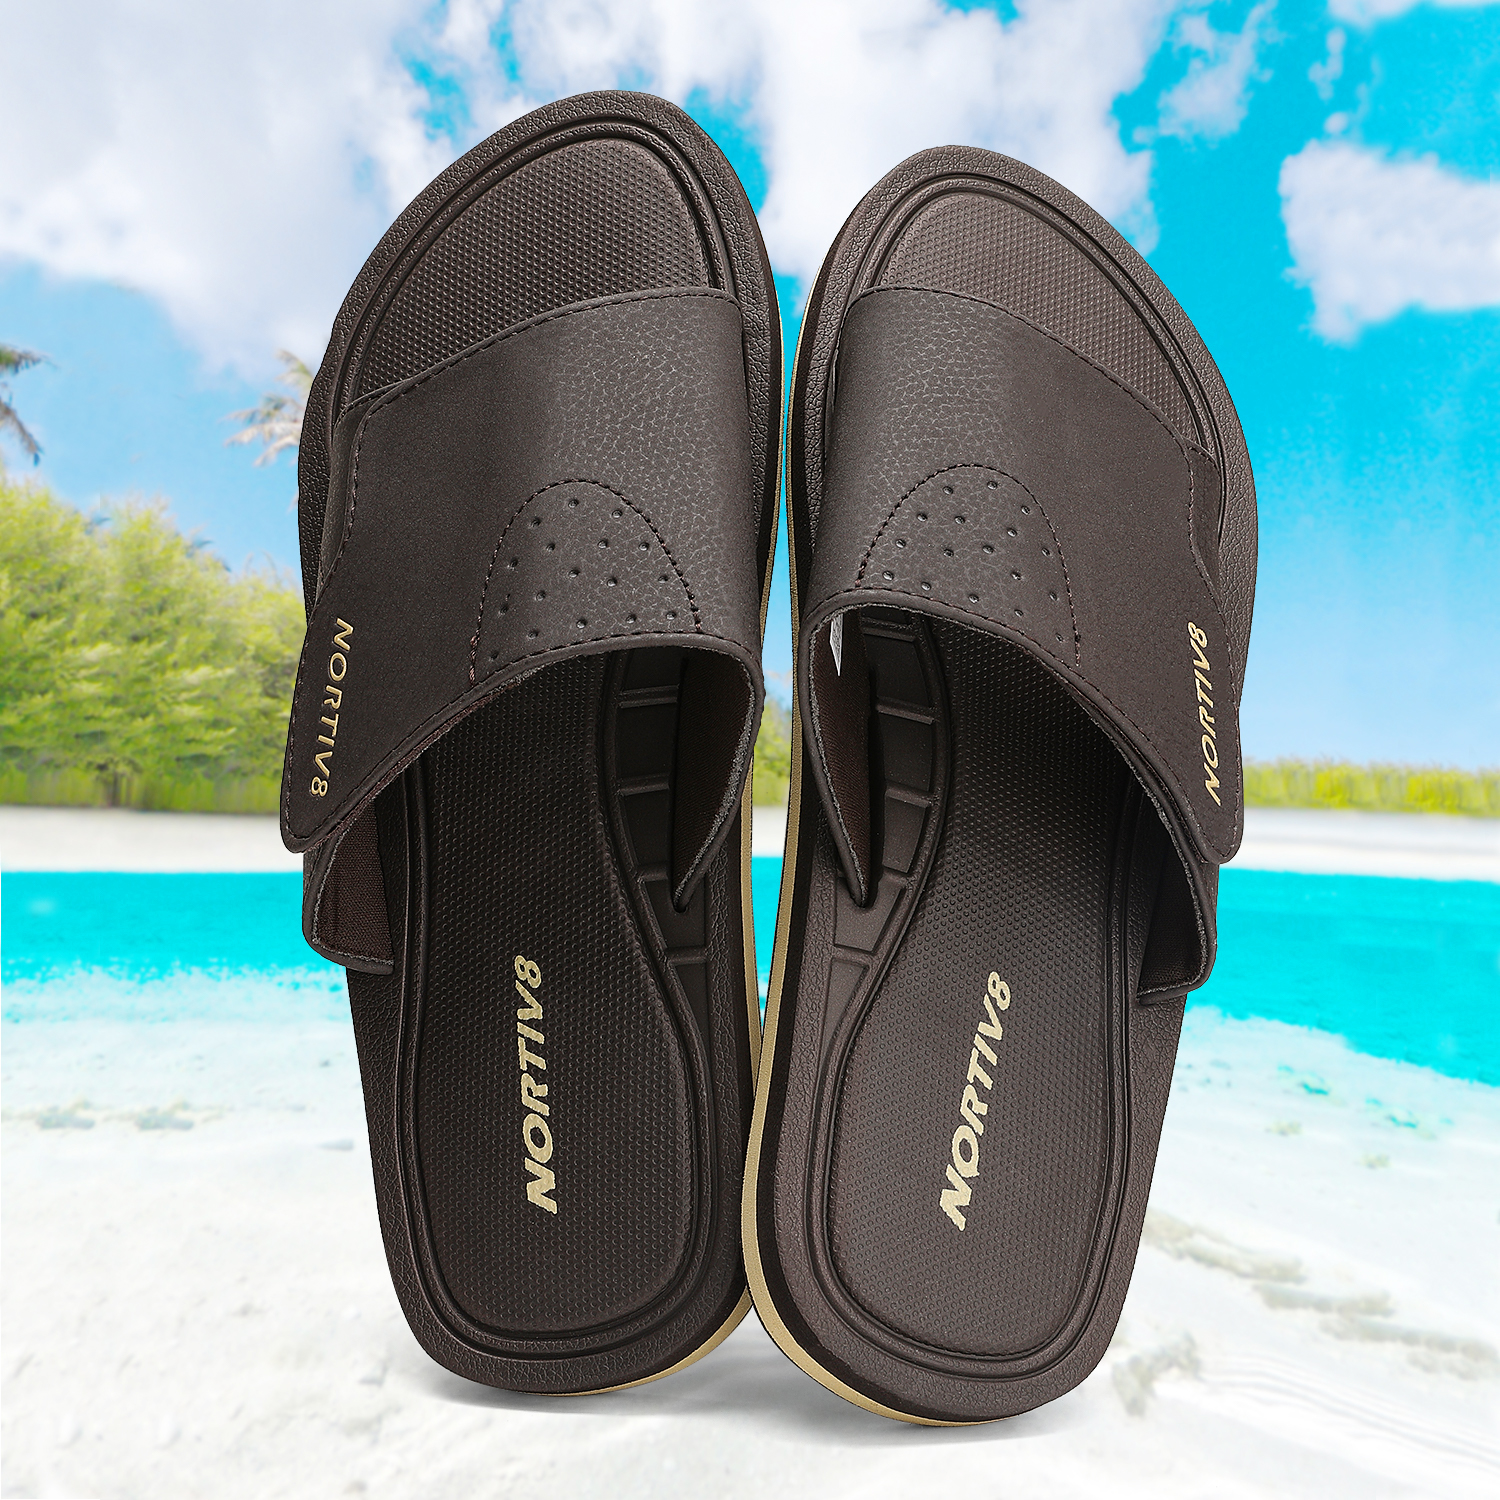 Nortiv 8 Men's Memory Foam Adjustable Slide Sandals Comfort Lightweight Beach Shoes Summer Outdoor Slipper Fusion Dark/Brown Size 15 - image 5 of 5